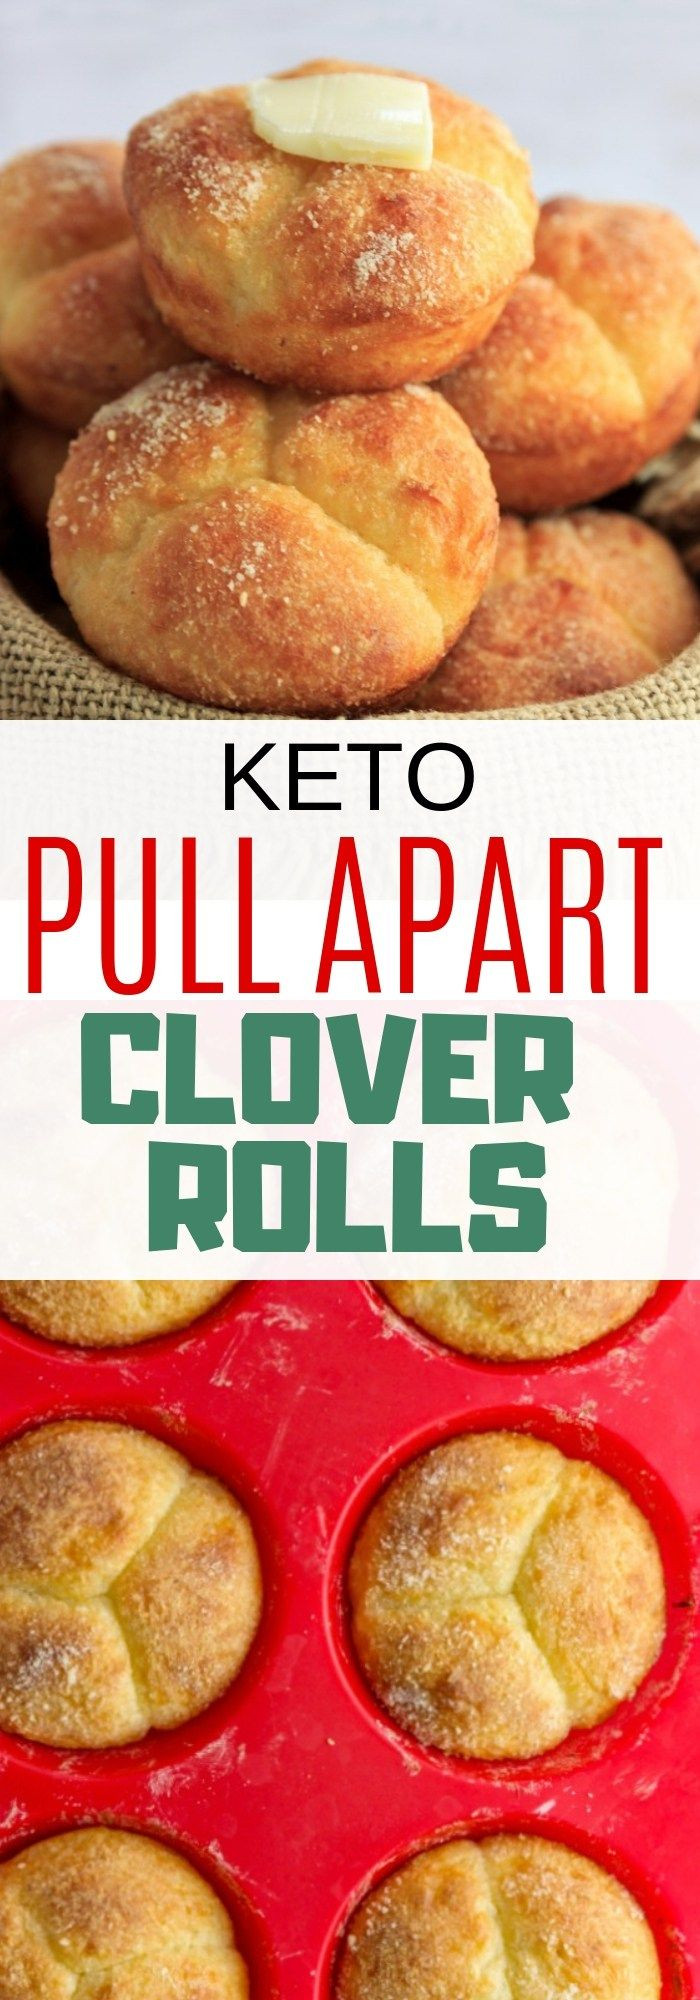 Pull Apart Keto Bread Rolls
 KETO PULL APART CLOVER ROLLS – Net Feed Daily